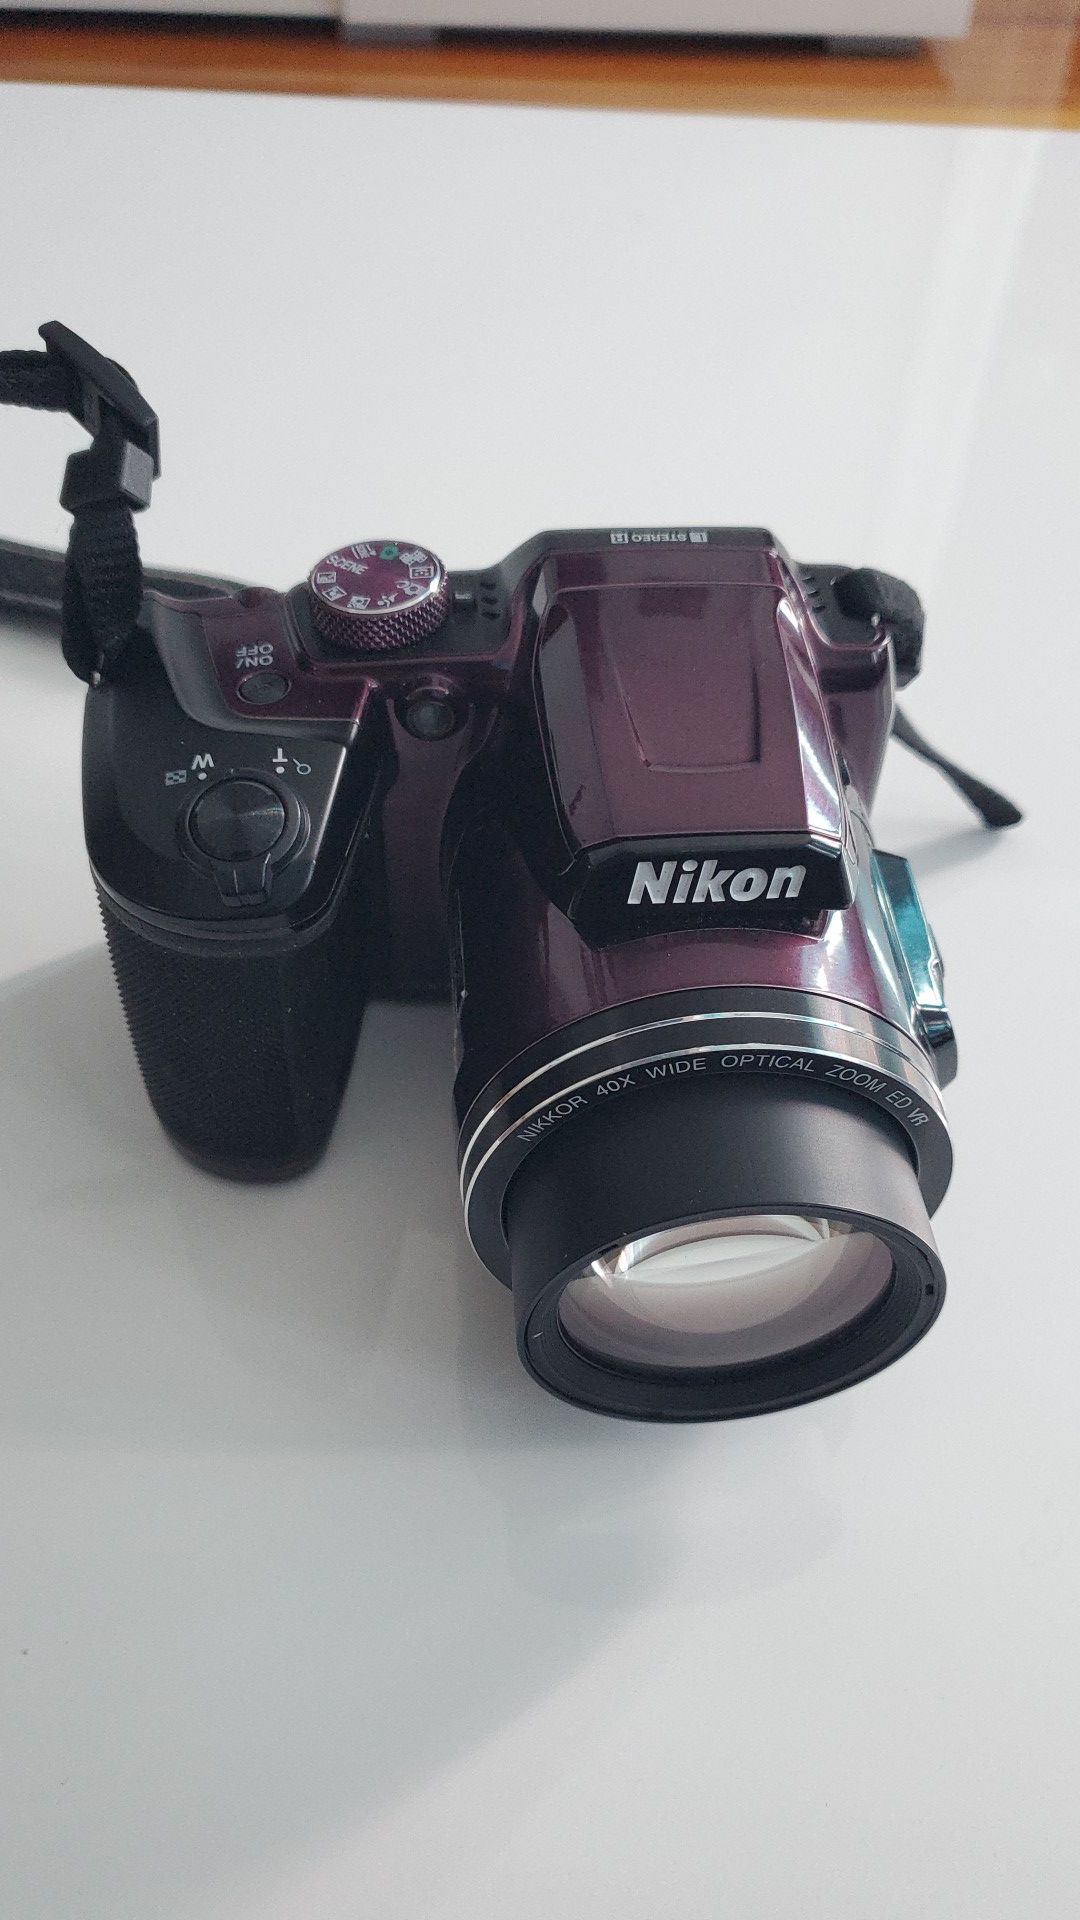 Nikon camera b500 new